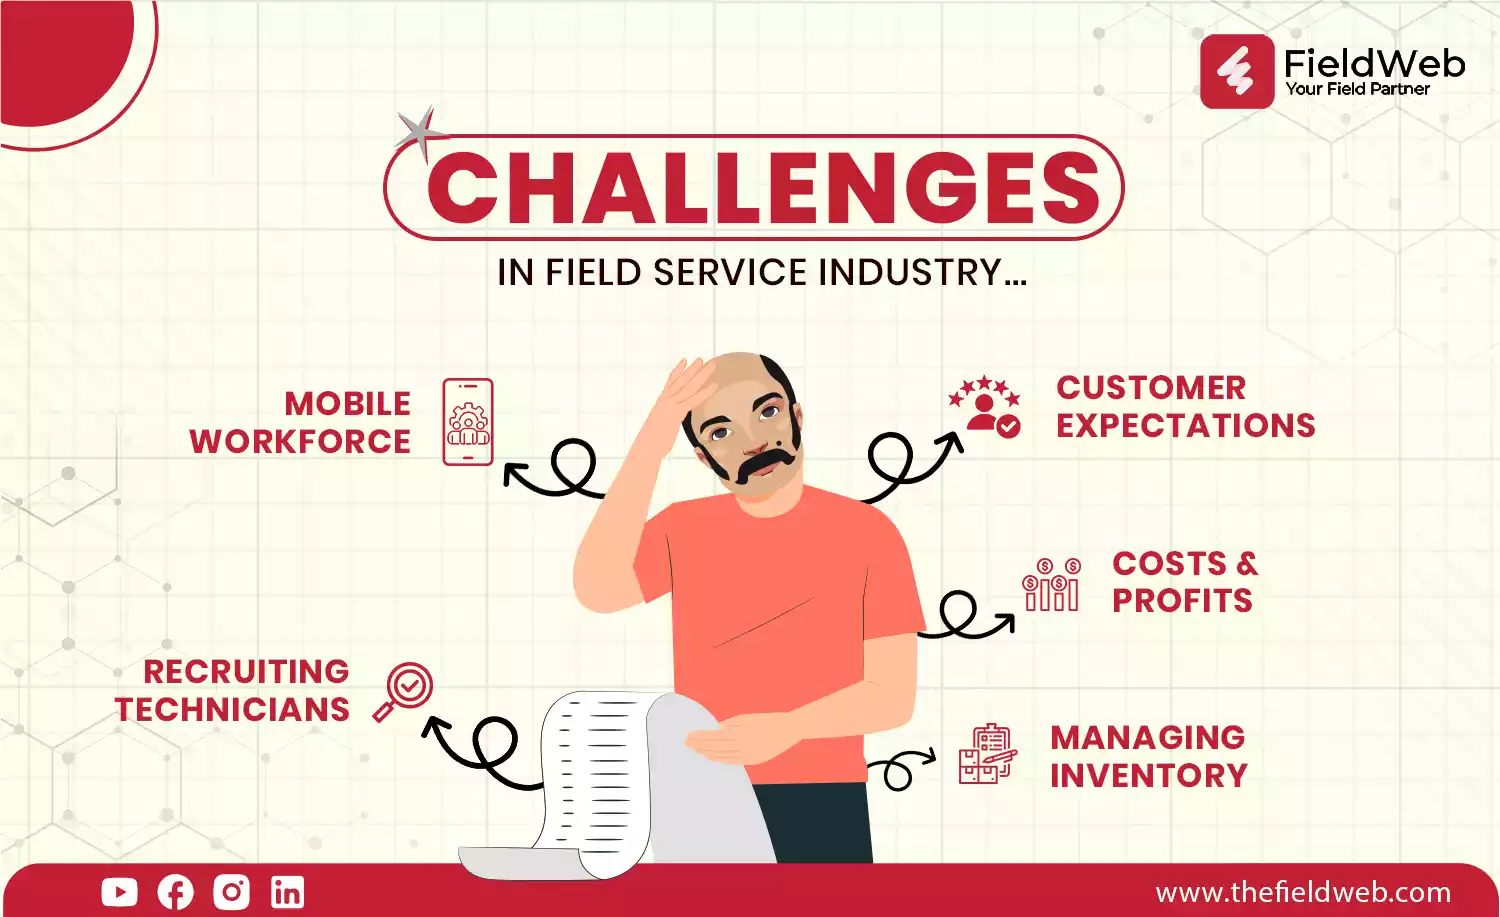 5 benefits of field service management software